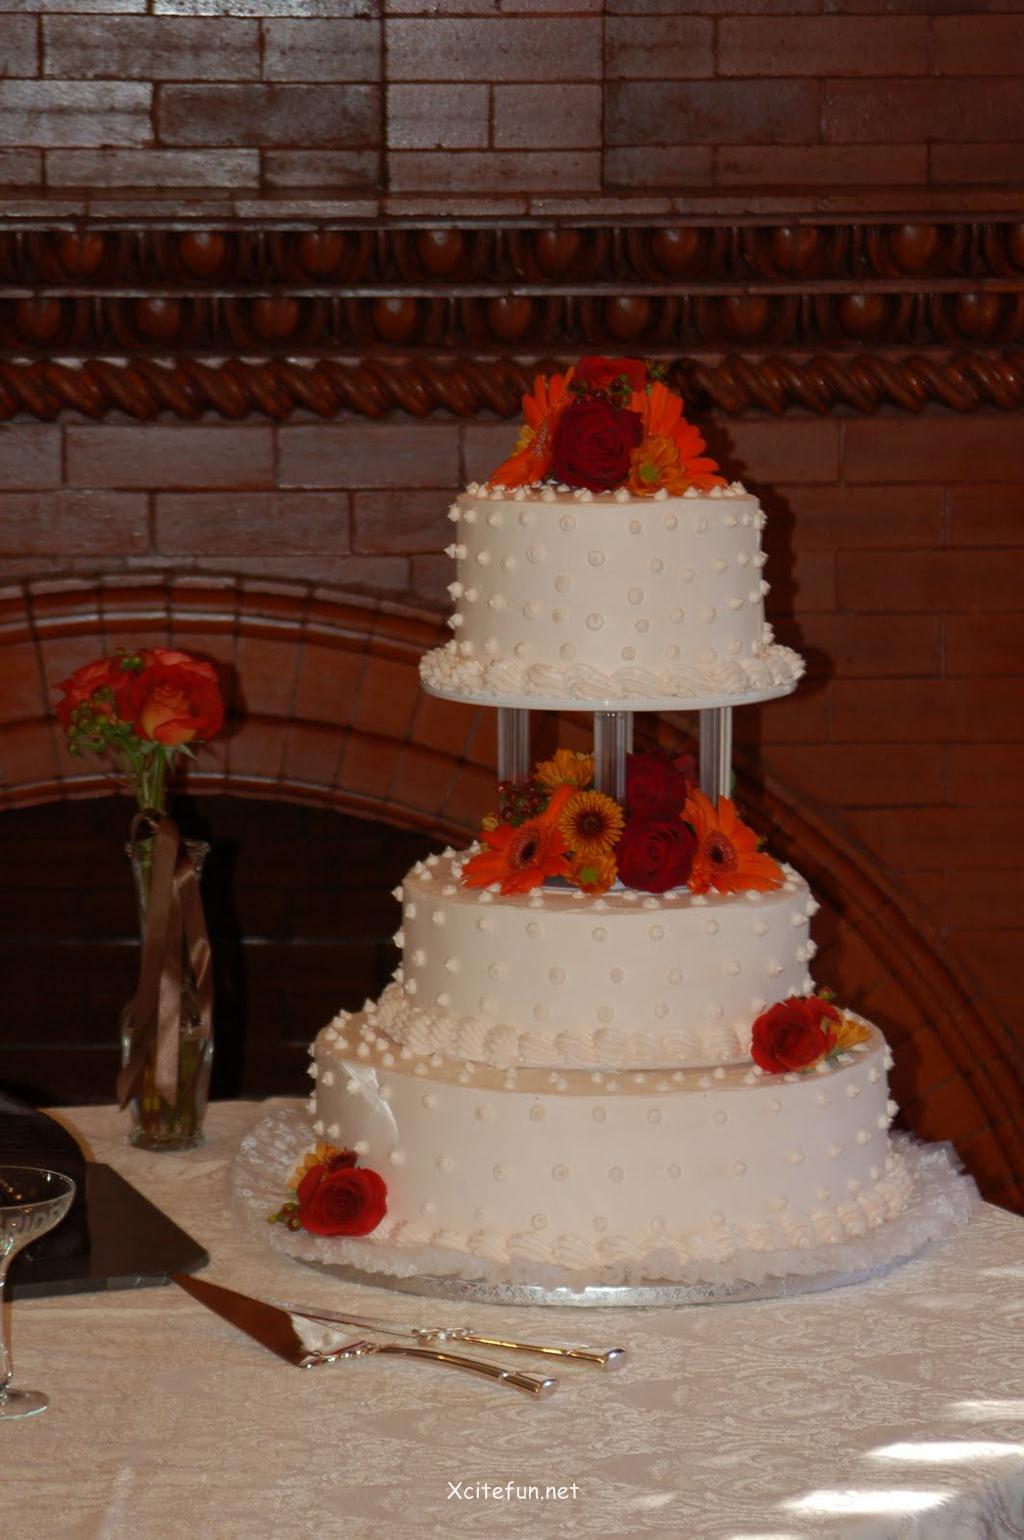  Wedding  Cakes  Decorating  Ideas  XciteFun net